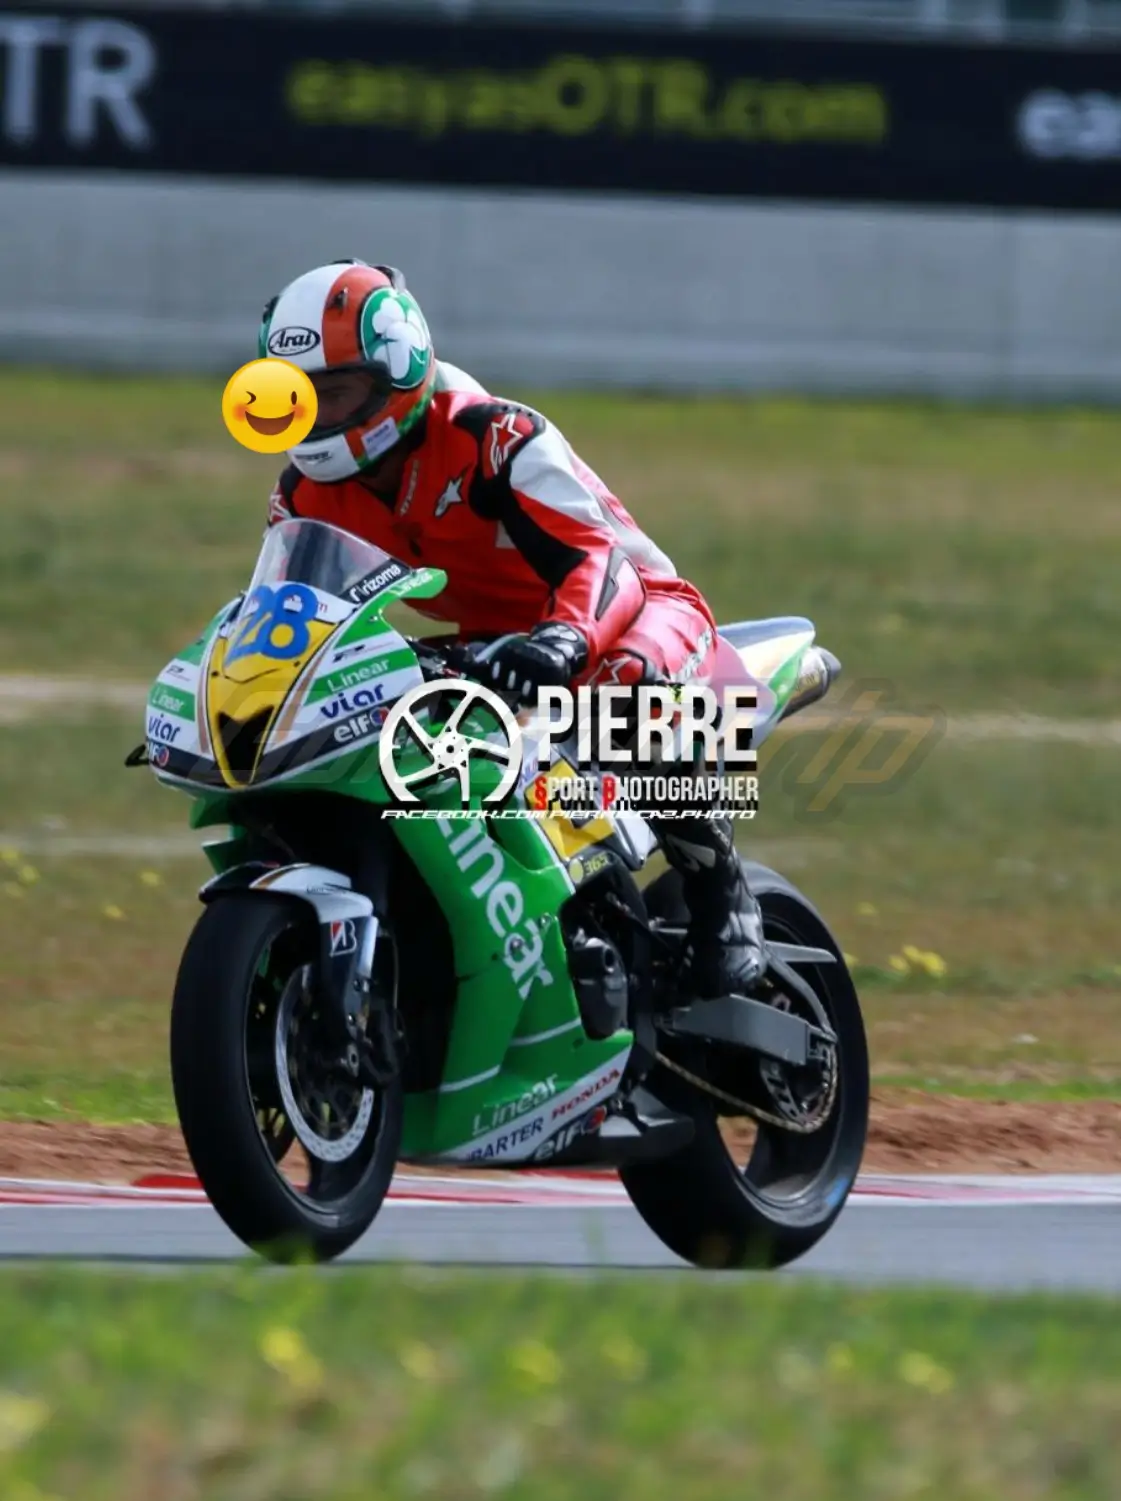 Rider-Review-Eoin-CBR600RR-LCR-Stefan-Bradl-Race-Bodywork-3